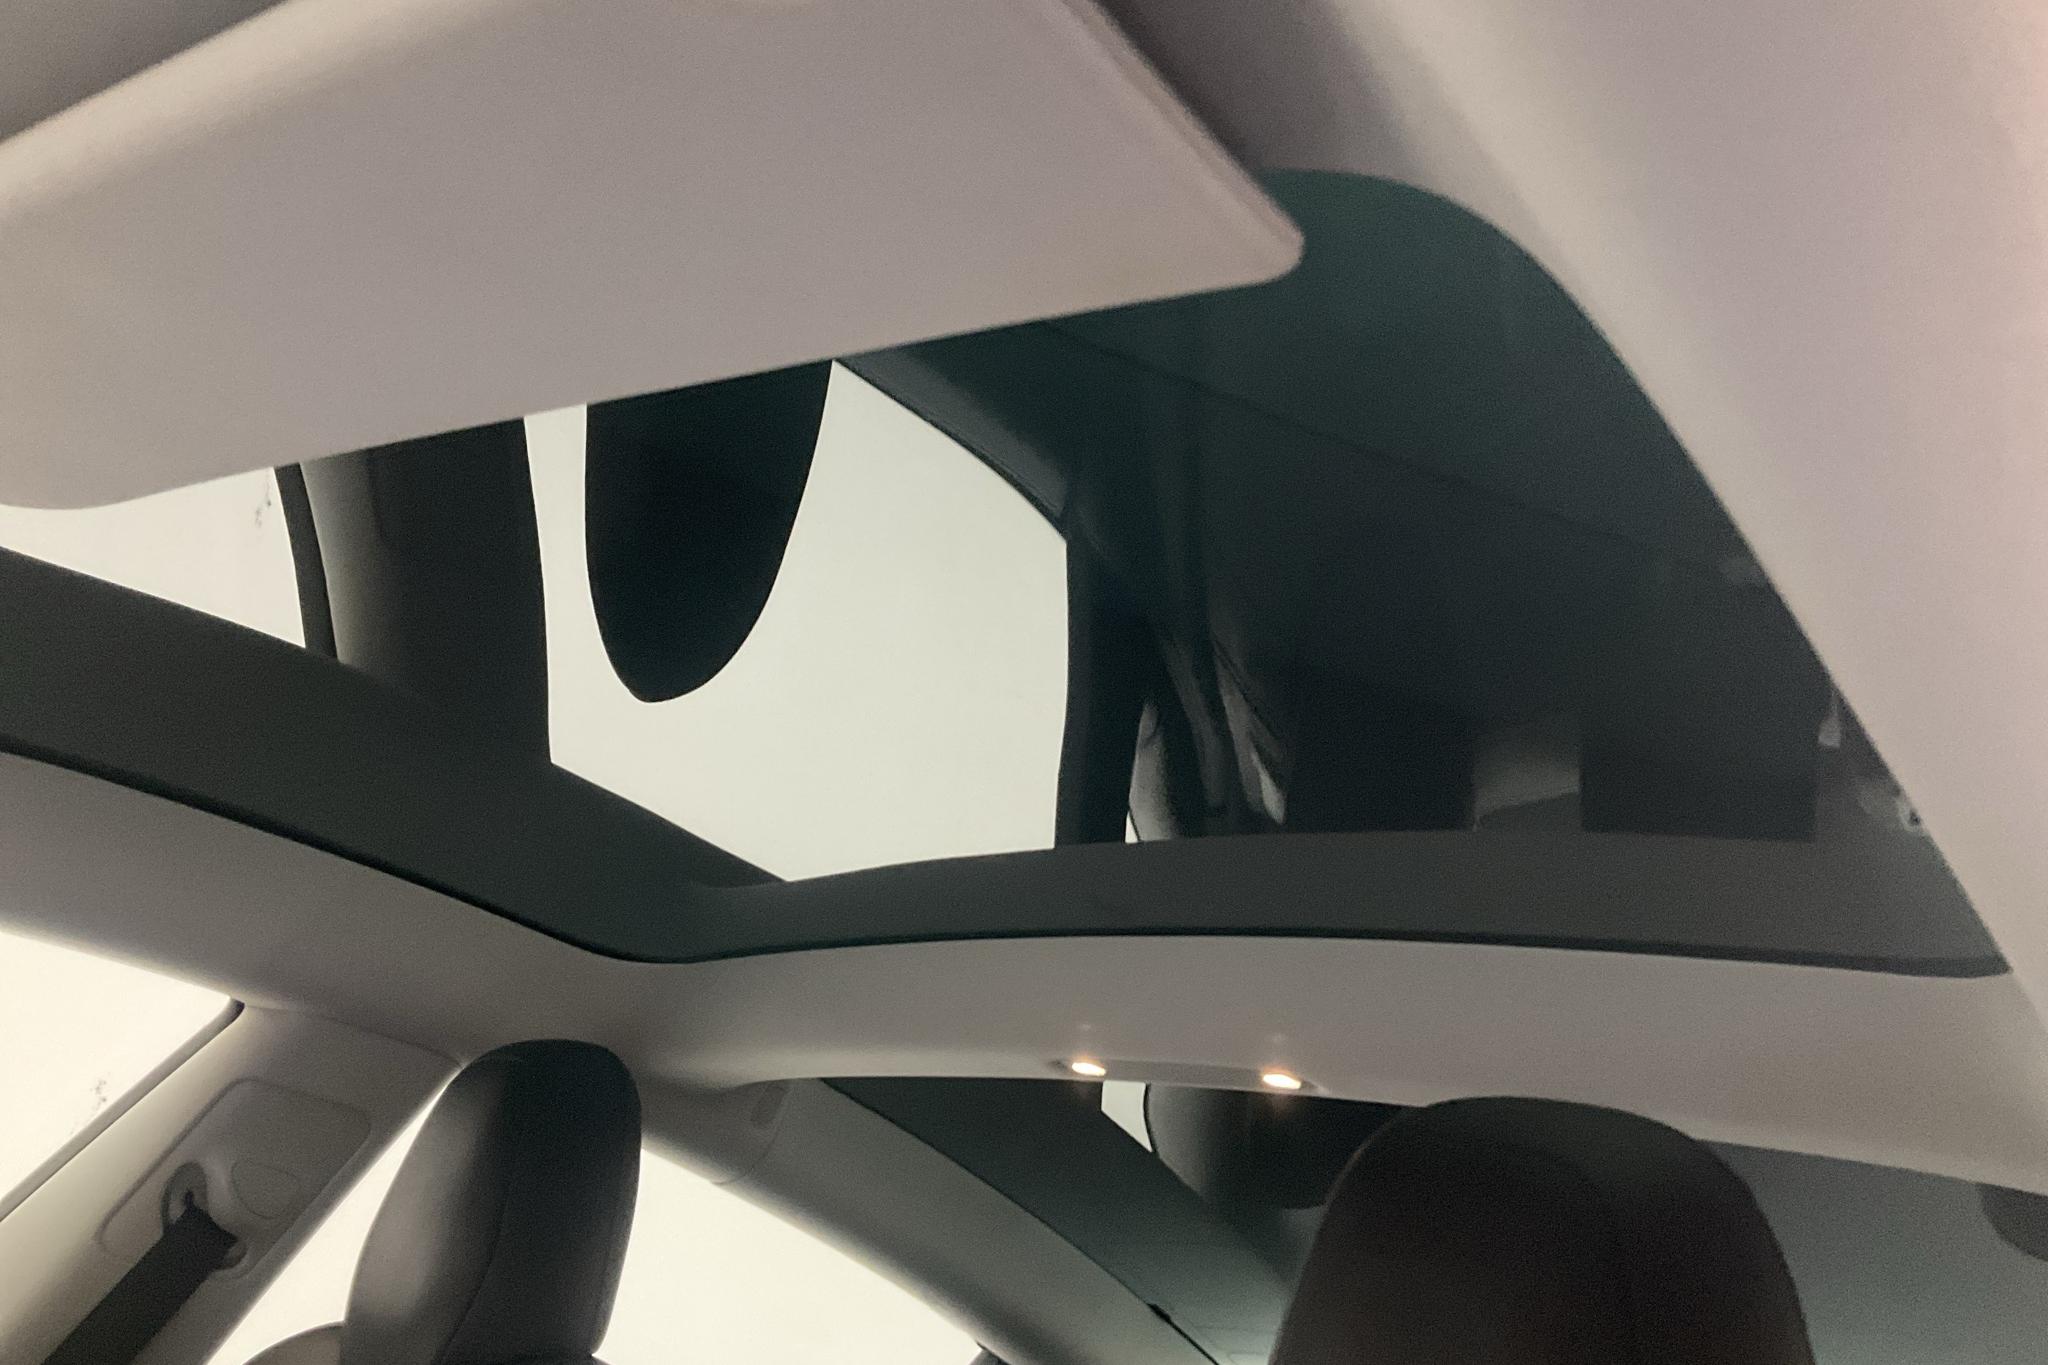 Tesla Model 3 Long Range Dual Motor AWD - 129 820 km - Automatic - gray - 2019